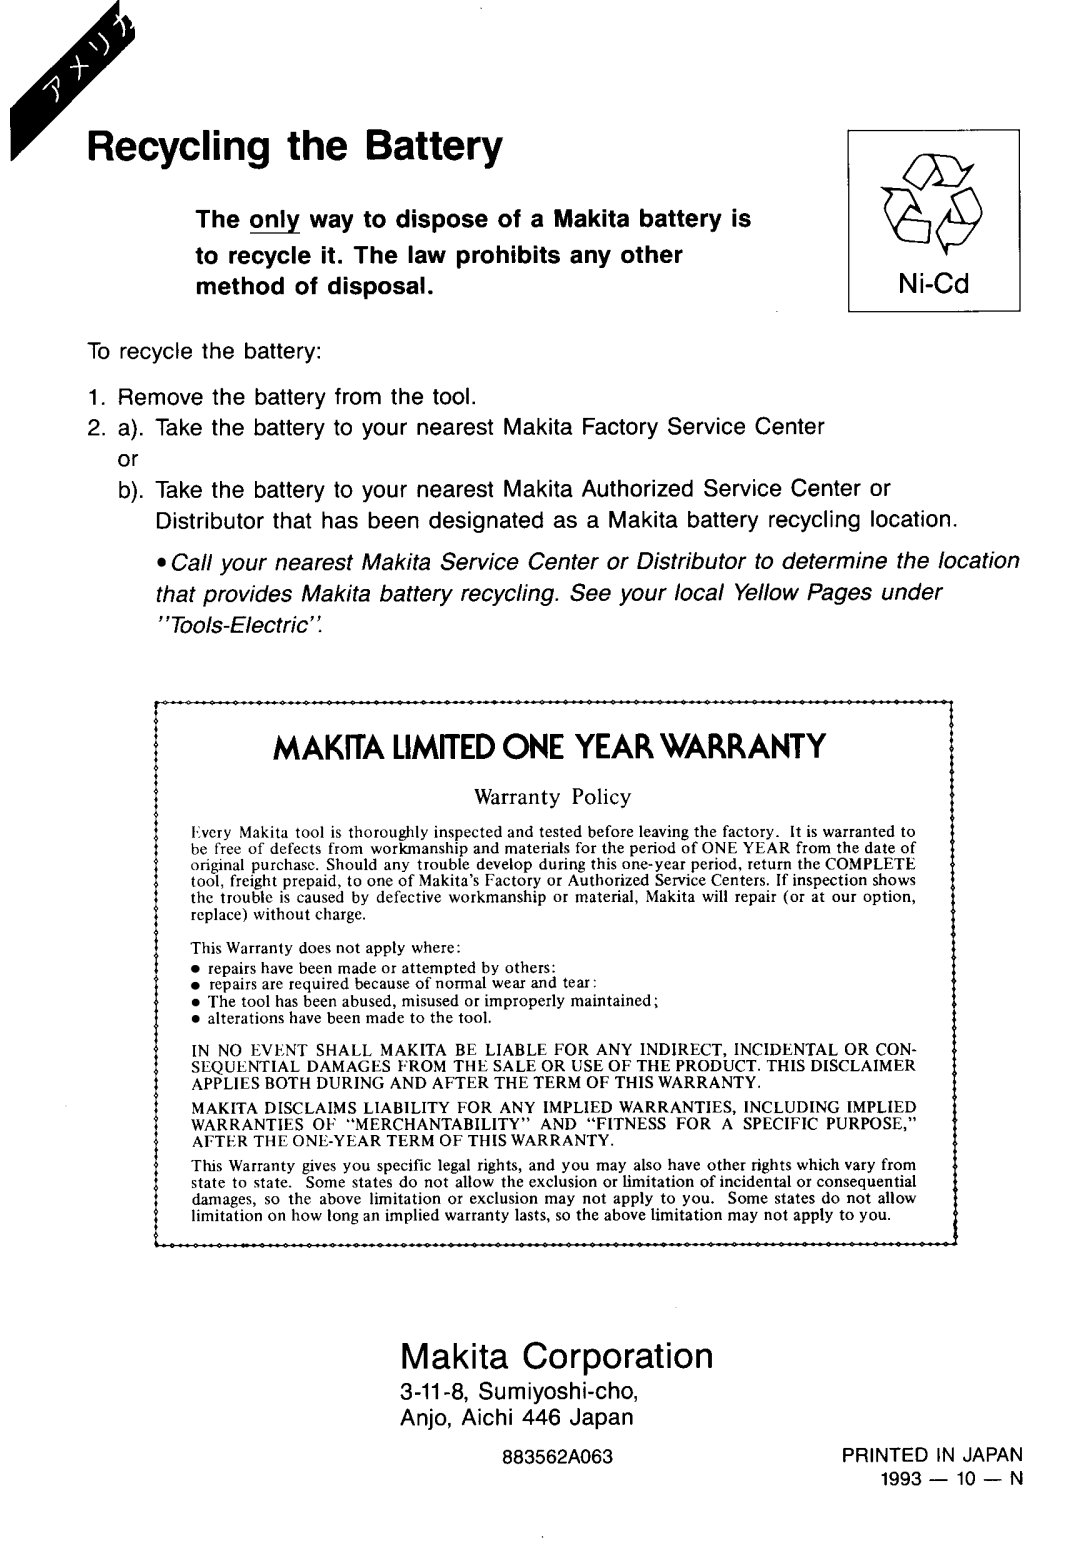 Makita 4071D Makita Corporation, Makita Limitedone Year Warranty, Ni-Cd, The only way to dispose of a Makita battery is 